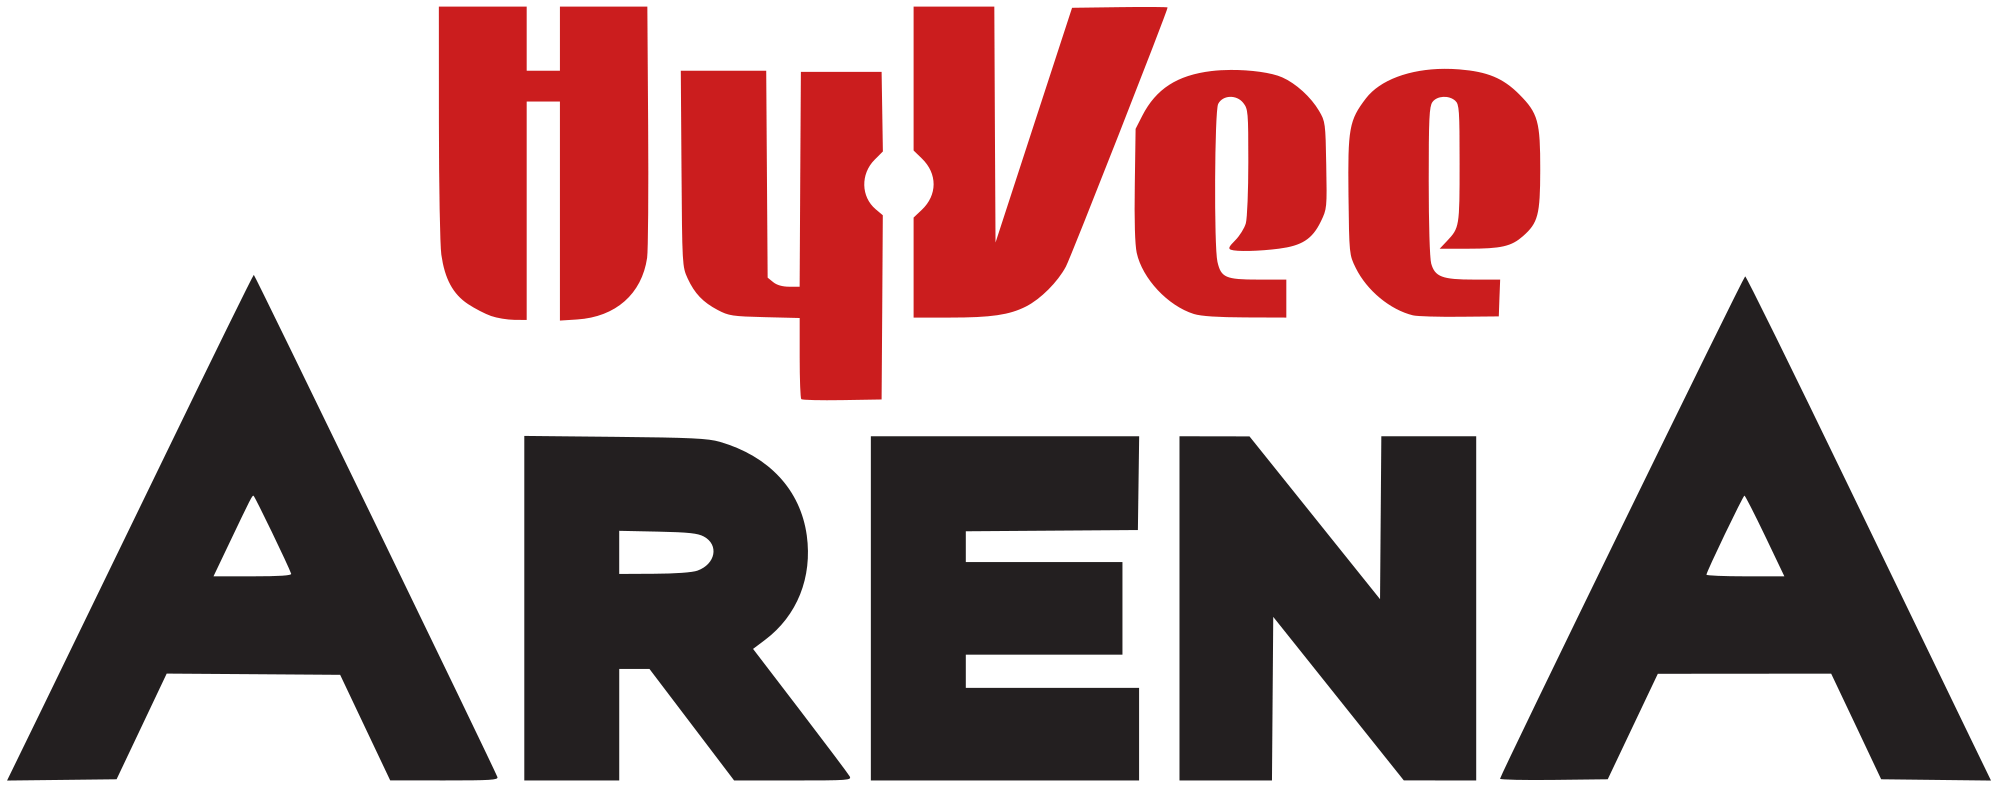 Hyvee Logo - Hy Vee Arena Logo.svg